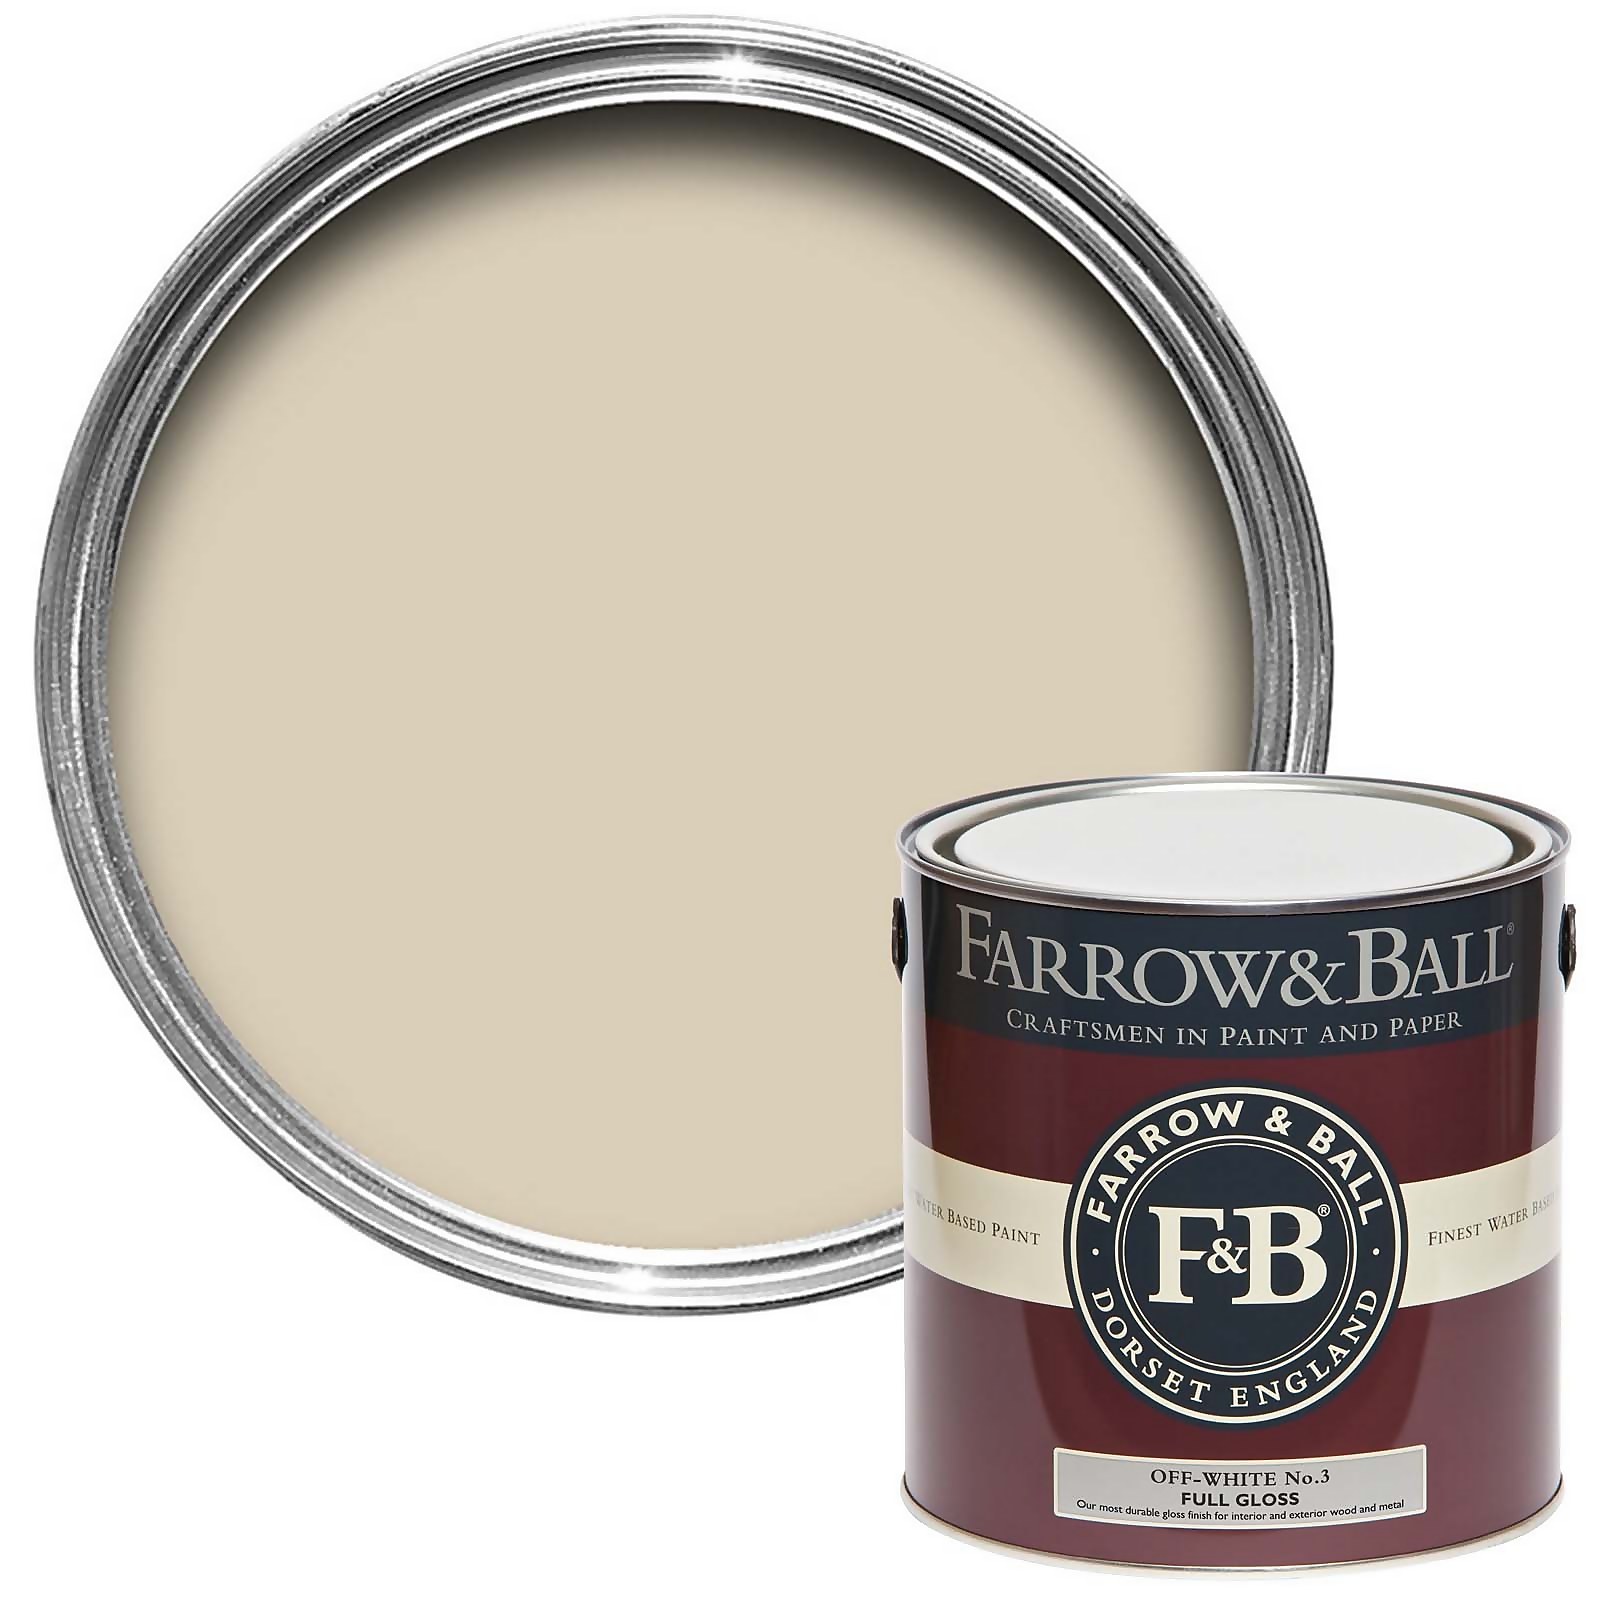 Farrow & Ball Full Gloss Paint Off-White No.3 - 2.5L